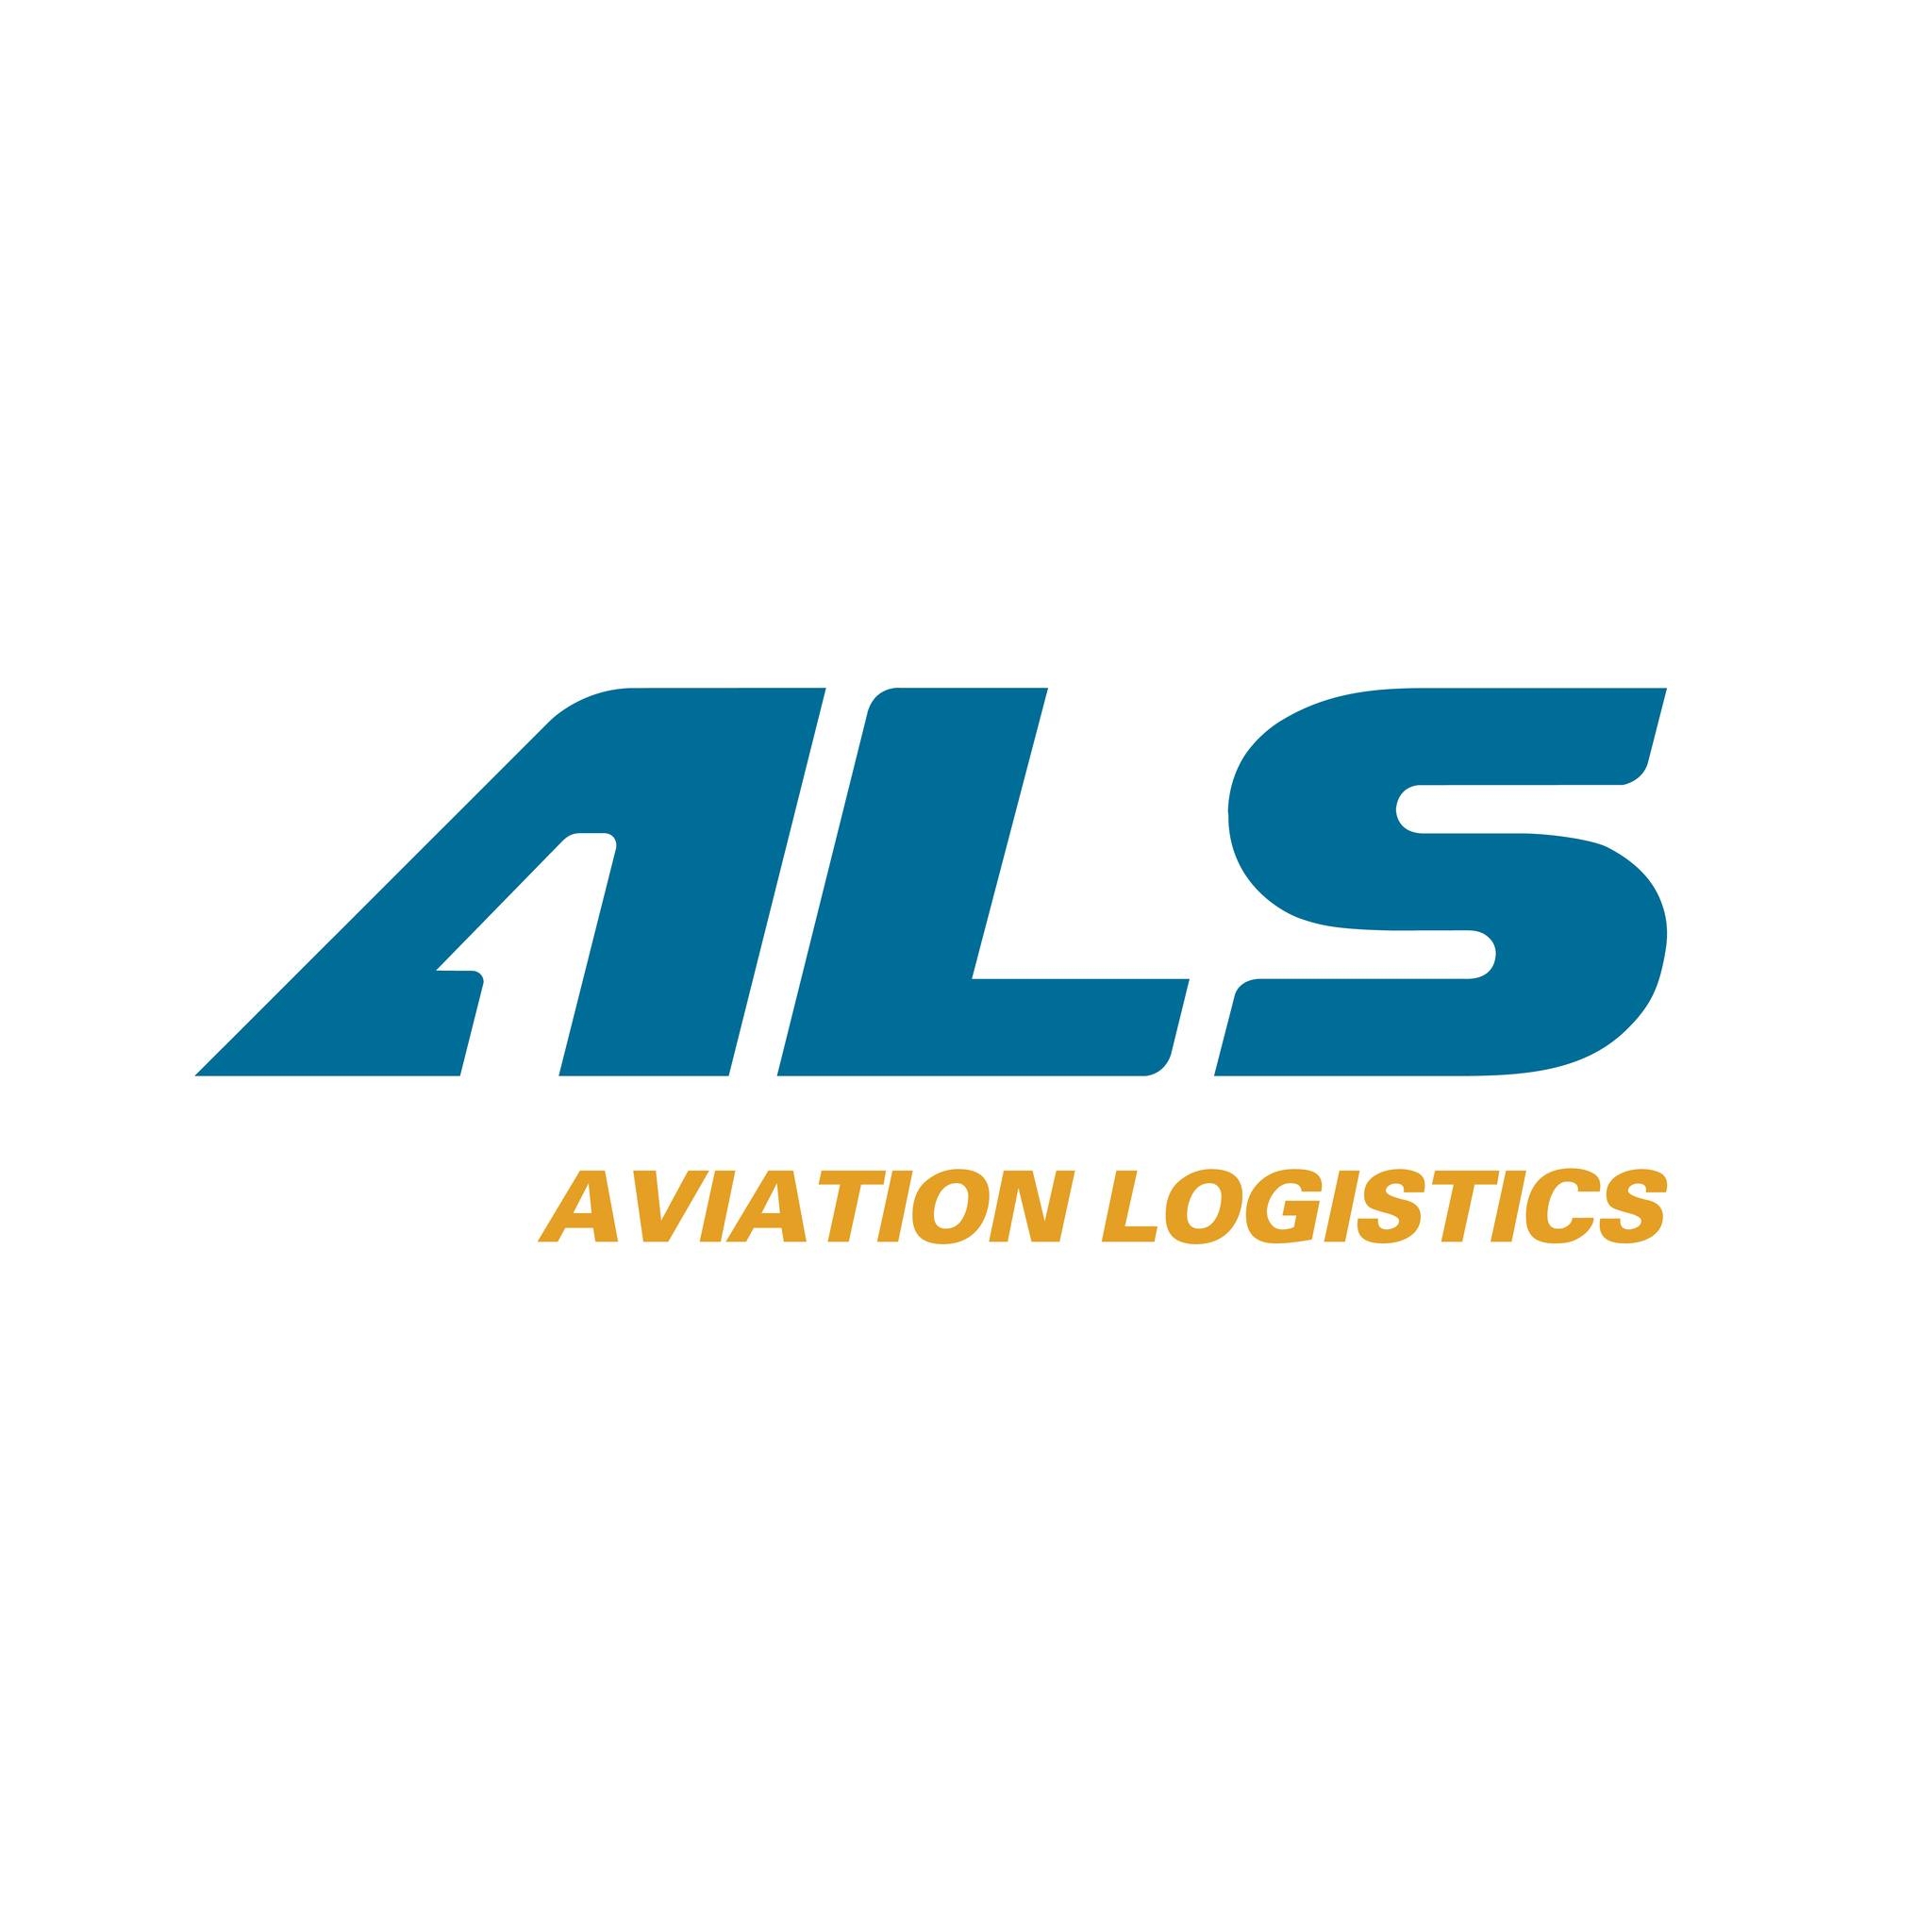 Aviation Logistics